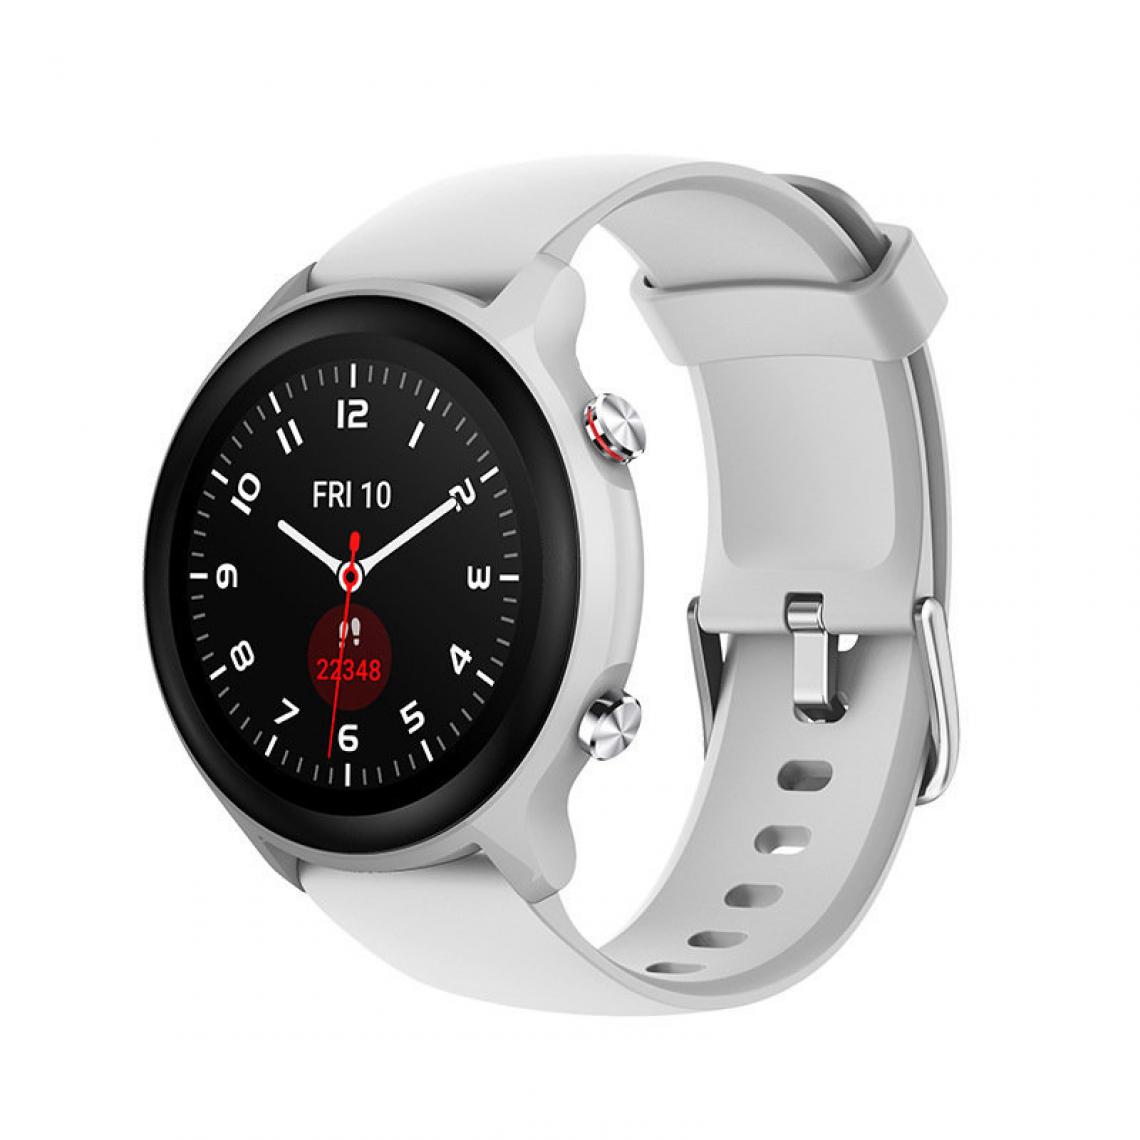 Chronotech Montres - Chronus Smart Watch, Waterproof 5ATM Fitness Tracker, Sleep Pedometer Smart Watch(White) - Montre connectée